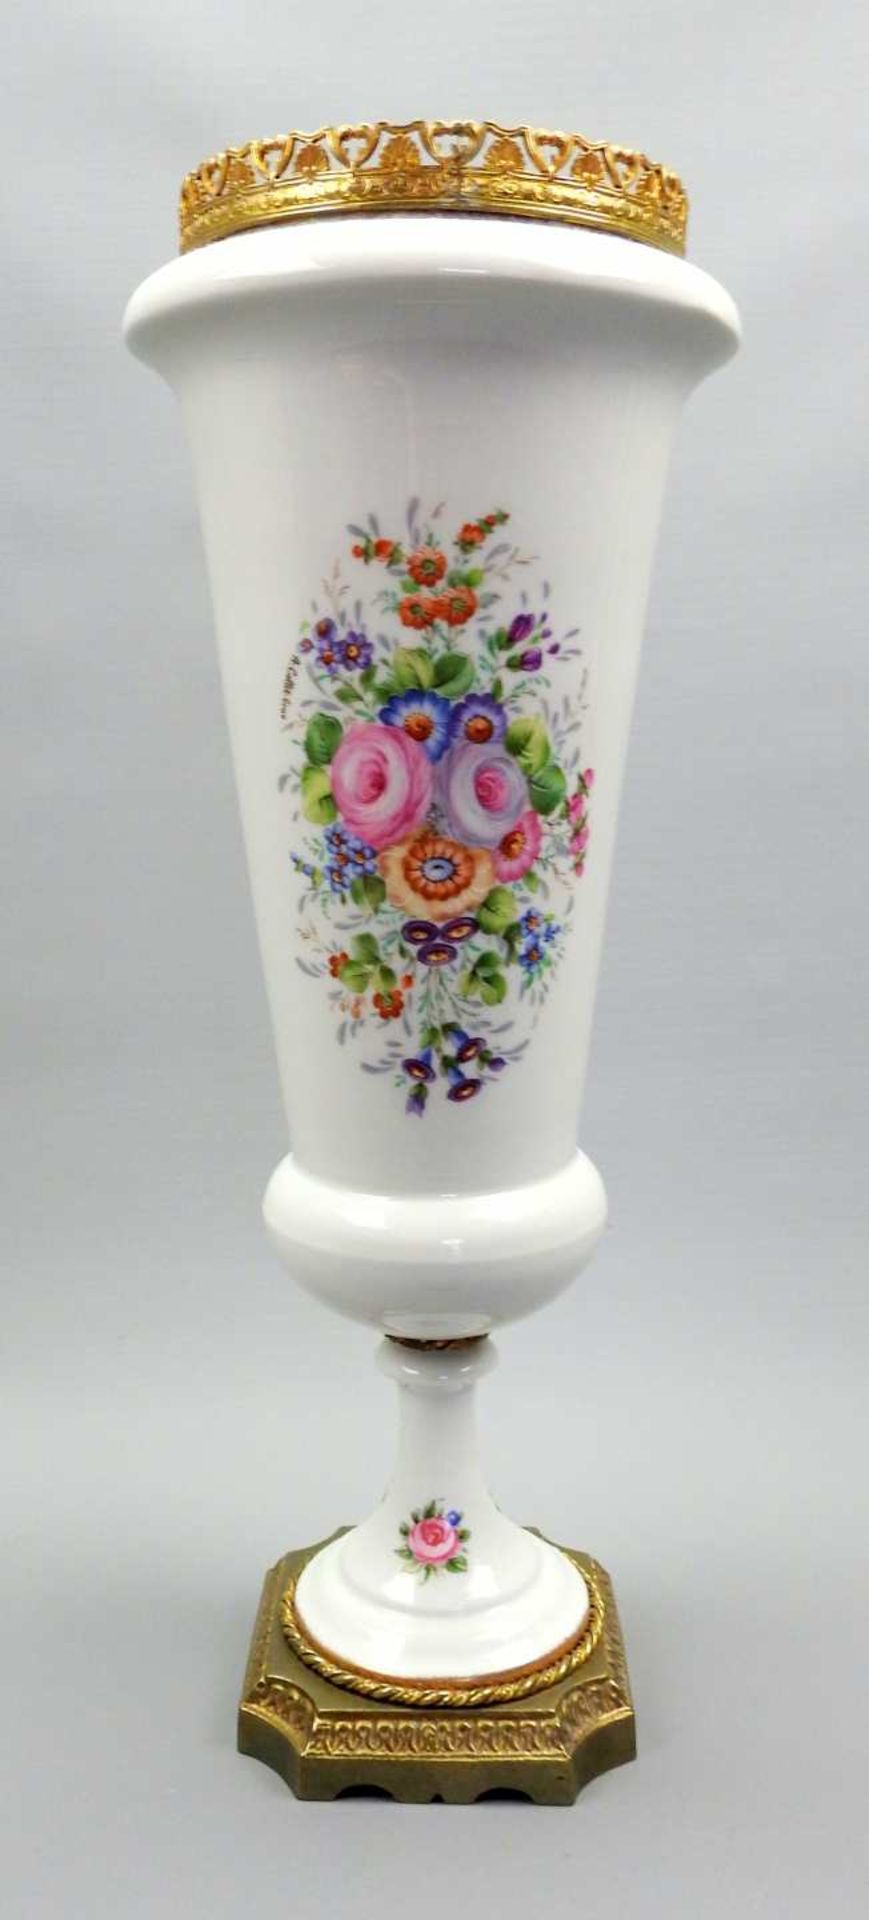 Imposante Zier-Vase Porzellan, ohne Marke am Standring aufglasur "Limoges" beschriftet - Image 5 of 6